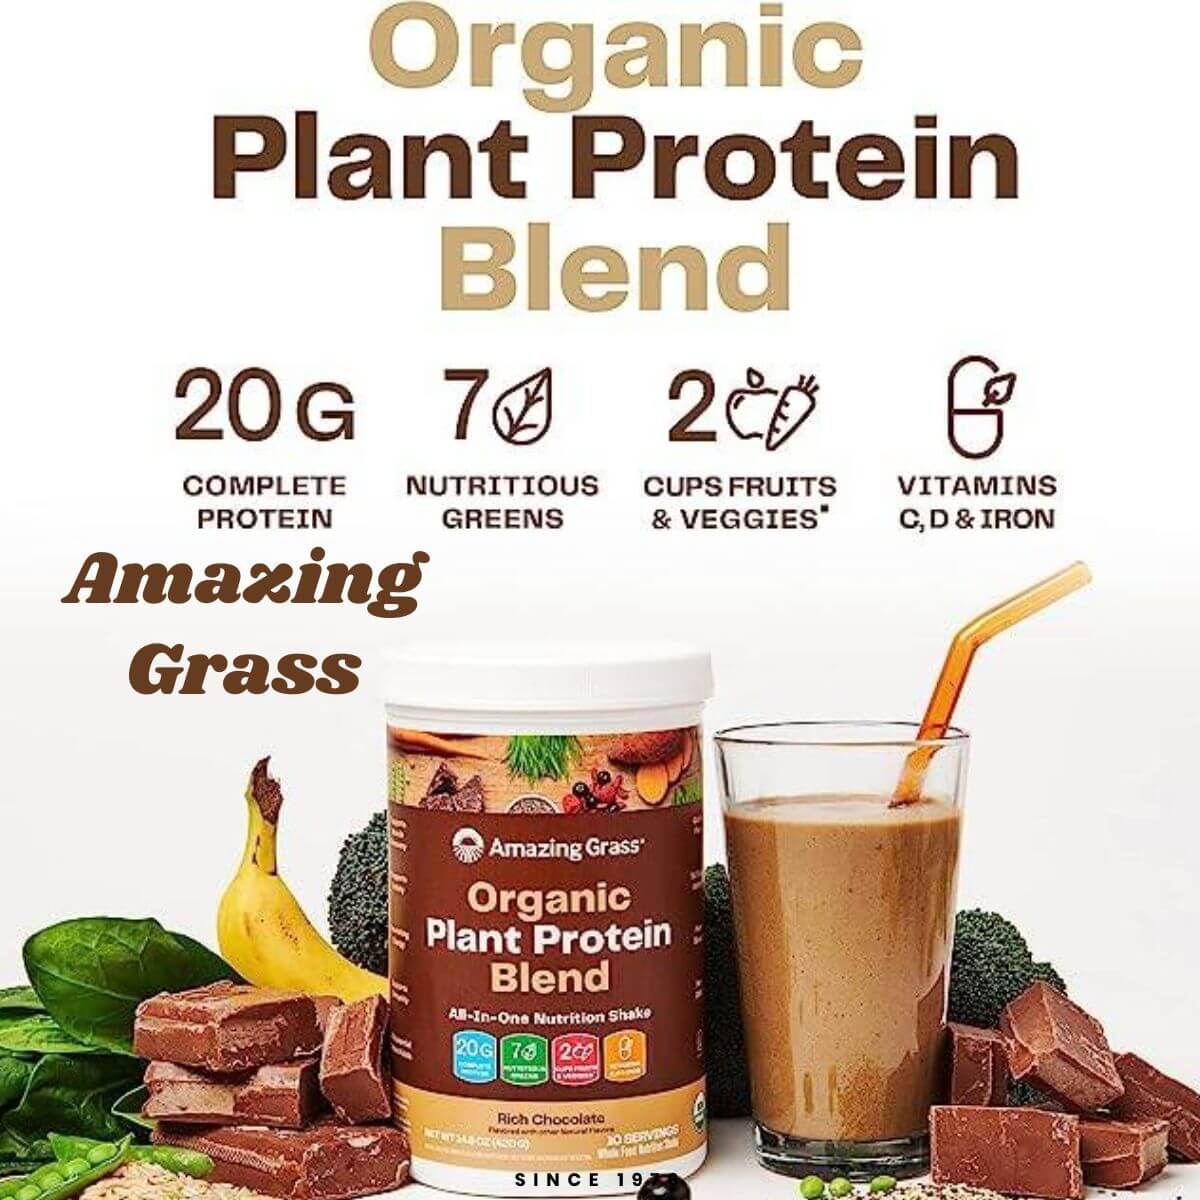 Organic Plant Protein Blend- Women's Top Vegan Protein Powders